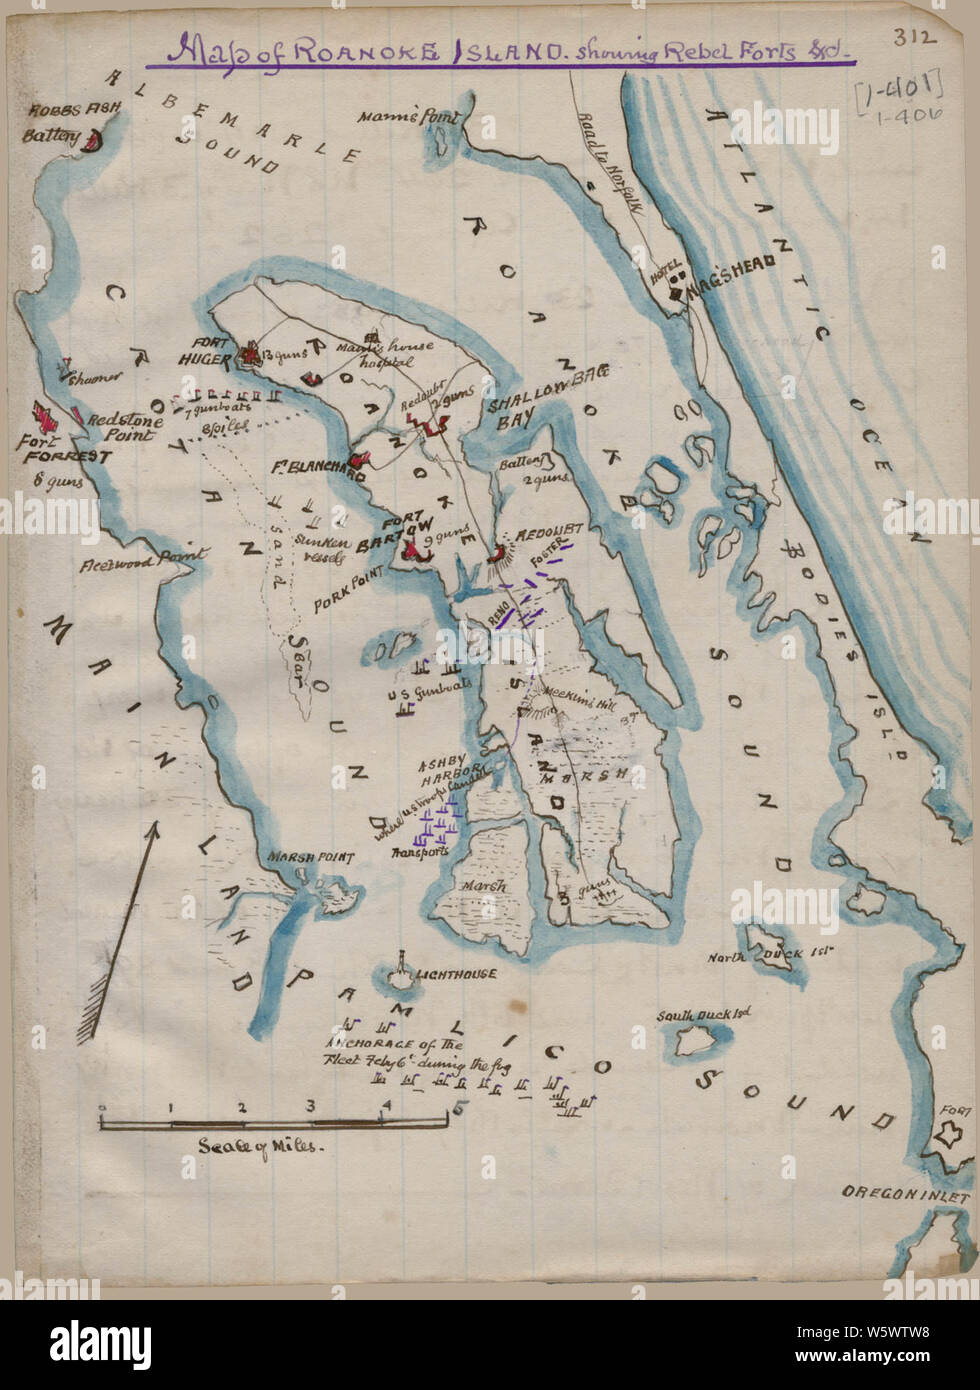 Civil War Maps 0793 Map of Roanoke Island showing Rebel forts Rebuild and Repair Stock Photo